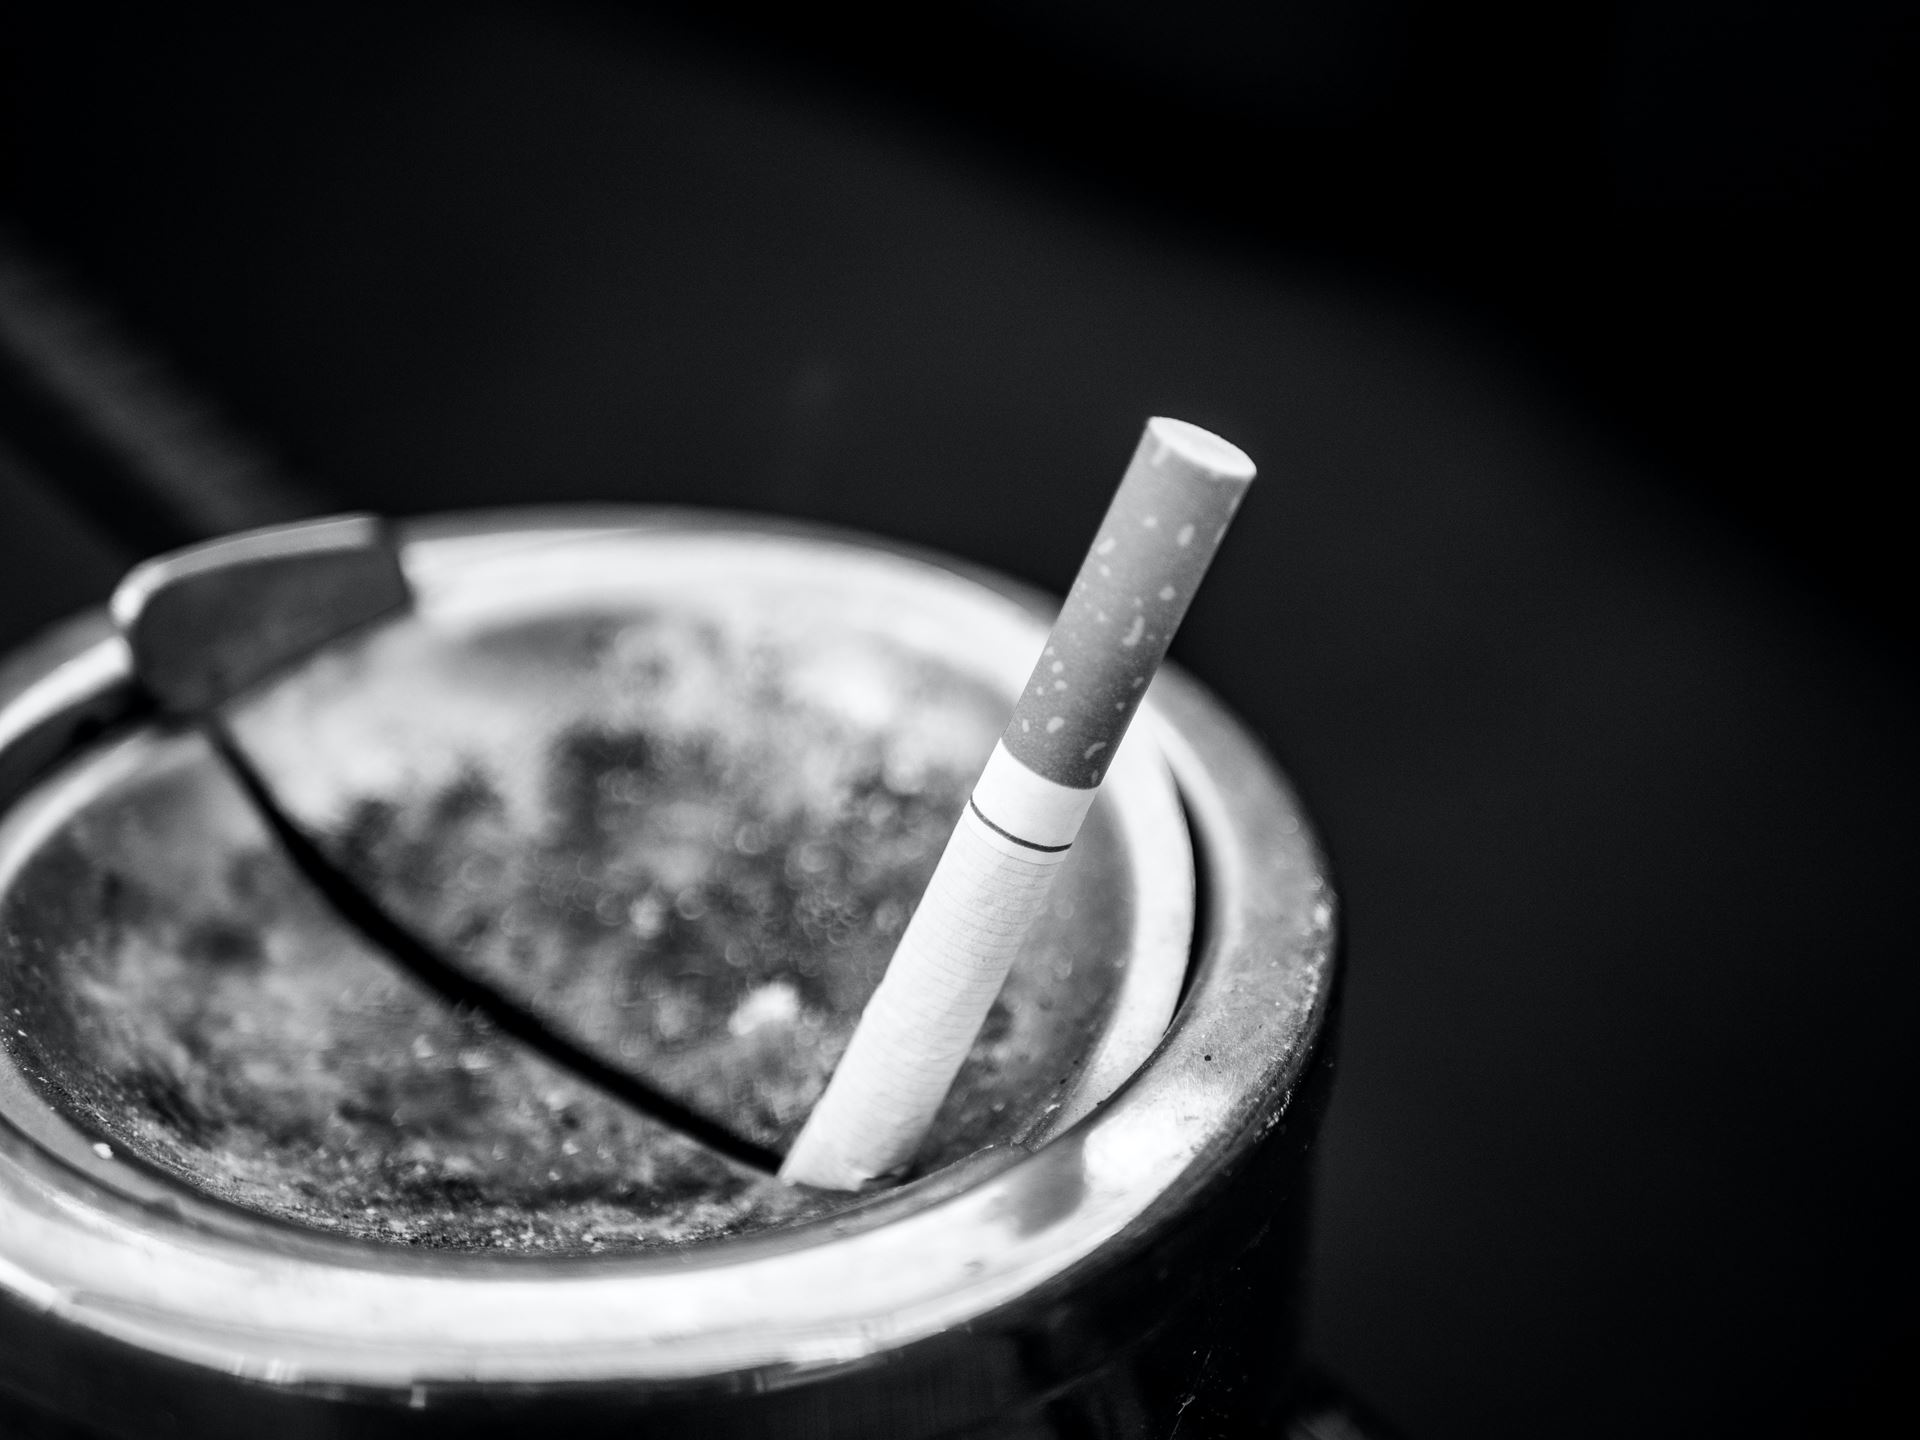 a cigarette in an ashtray